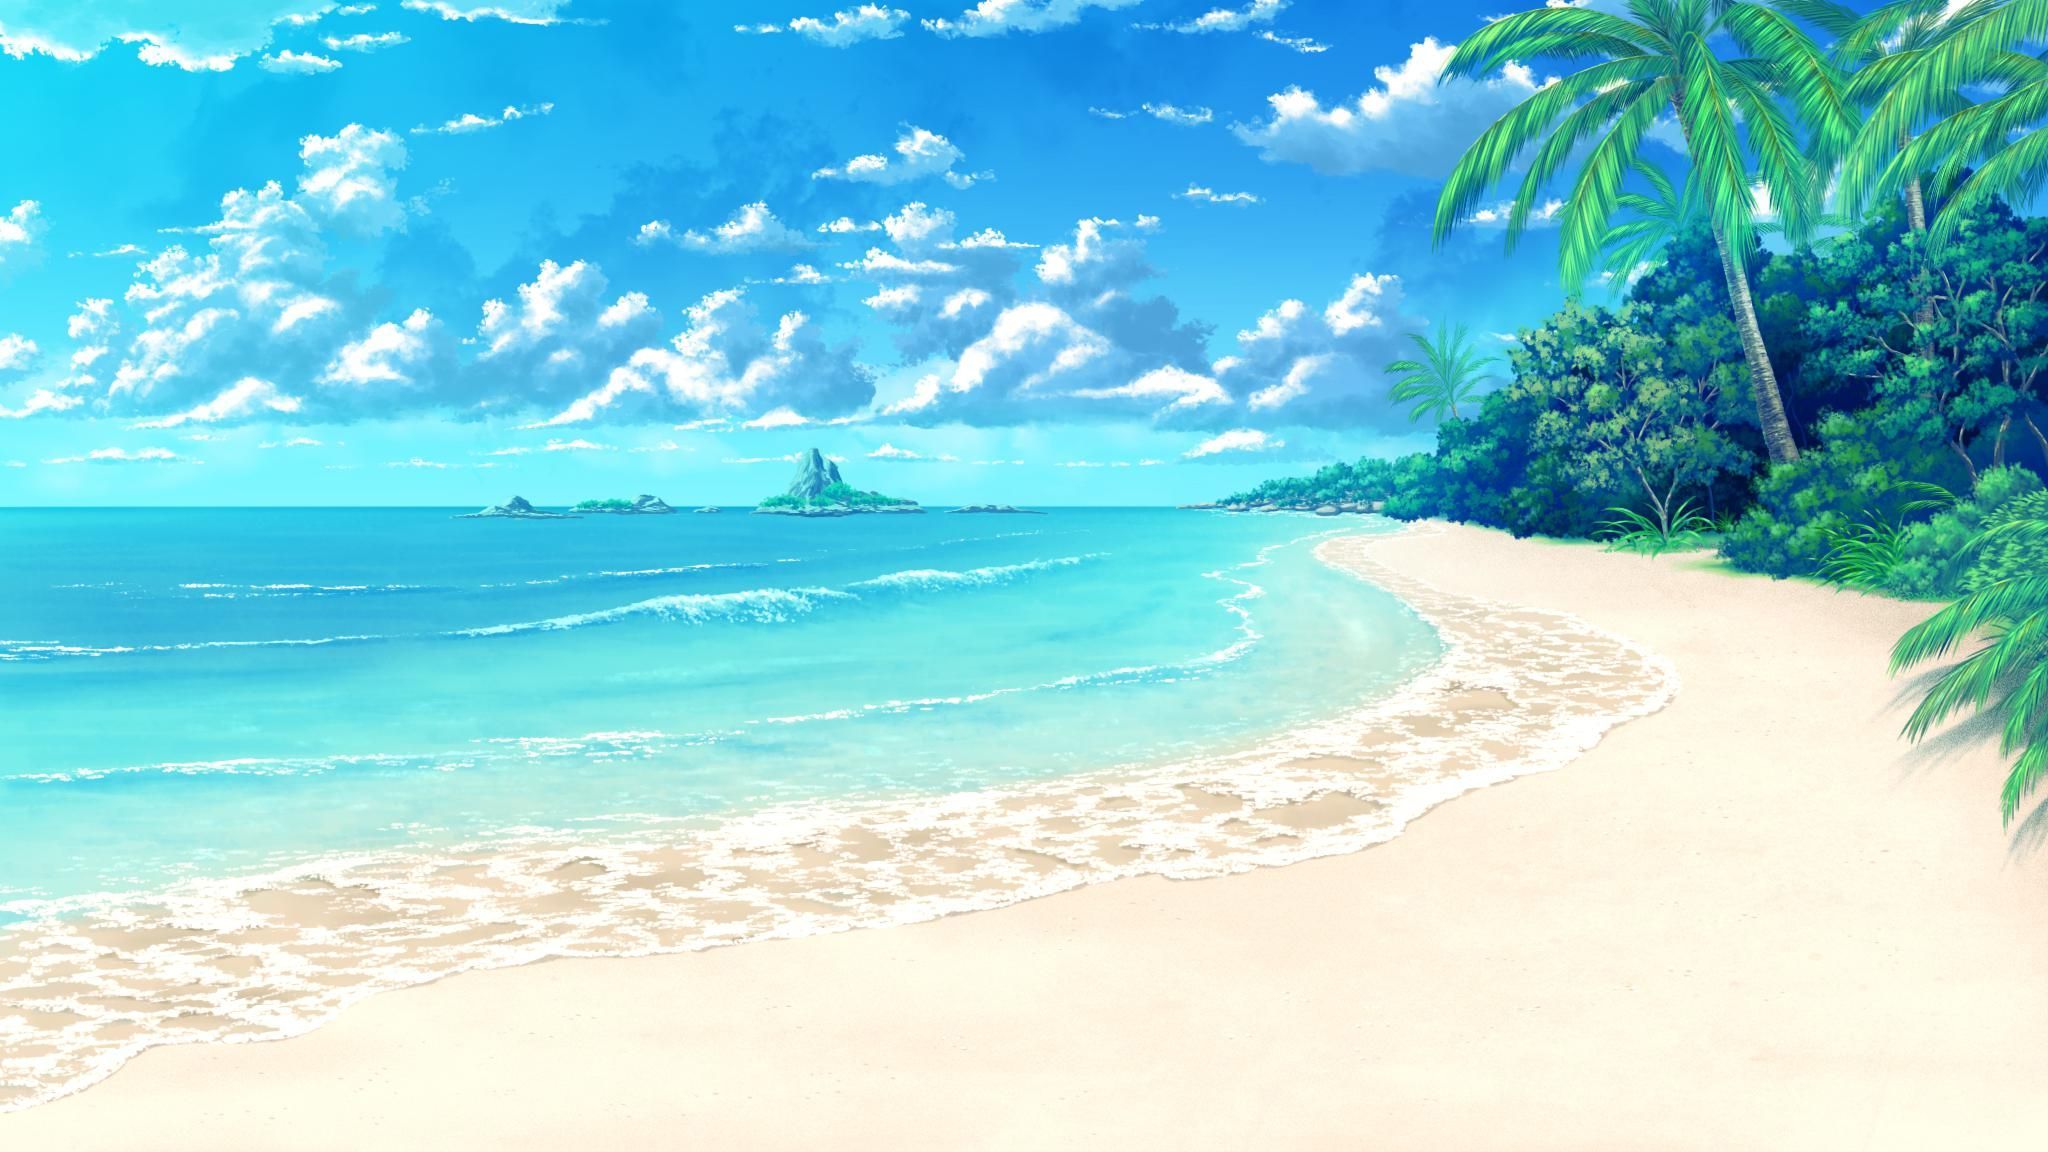 Anime Beach Wallpaper Free Anime Beach Background - Anime scenery, Scenery wallpaper, Beach scenery